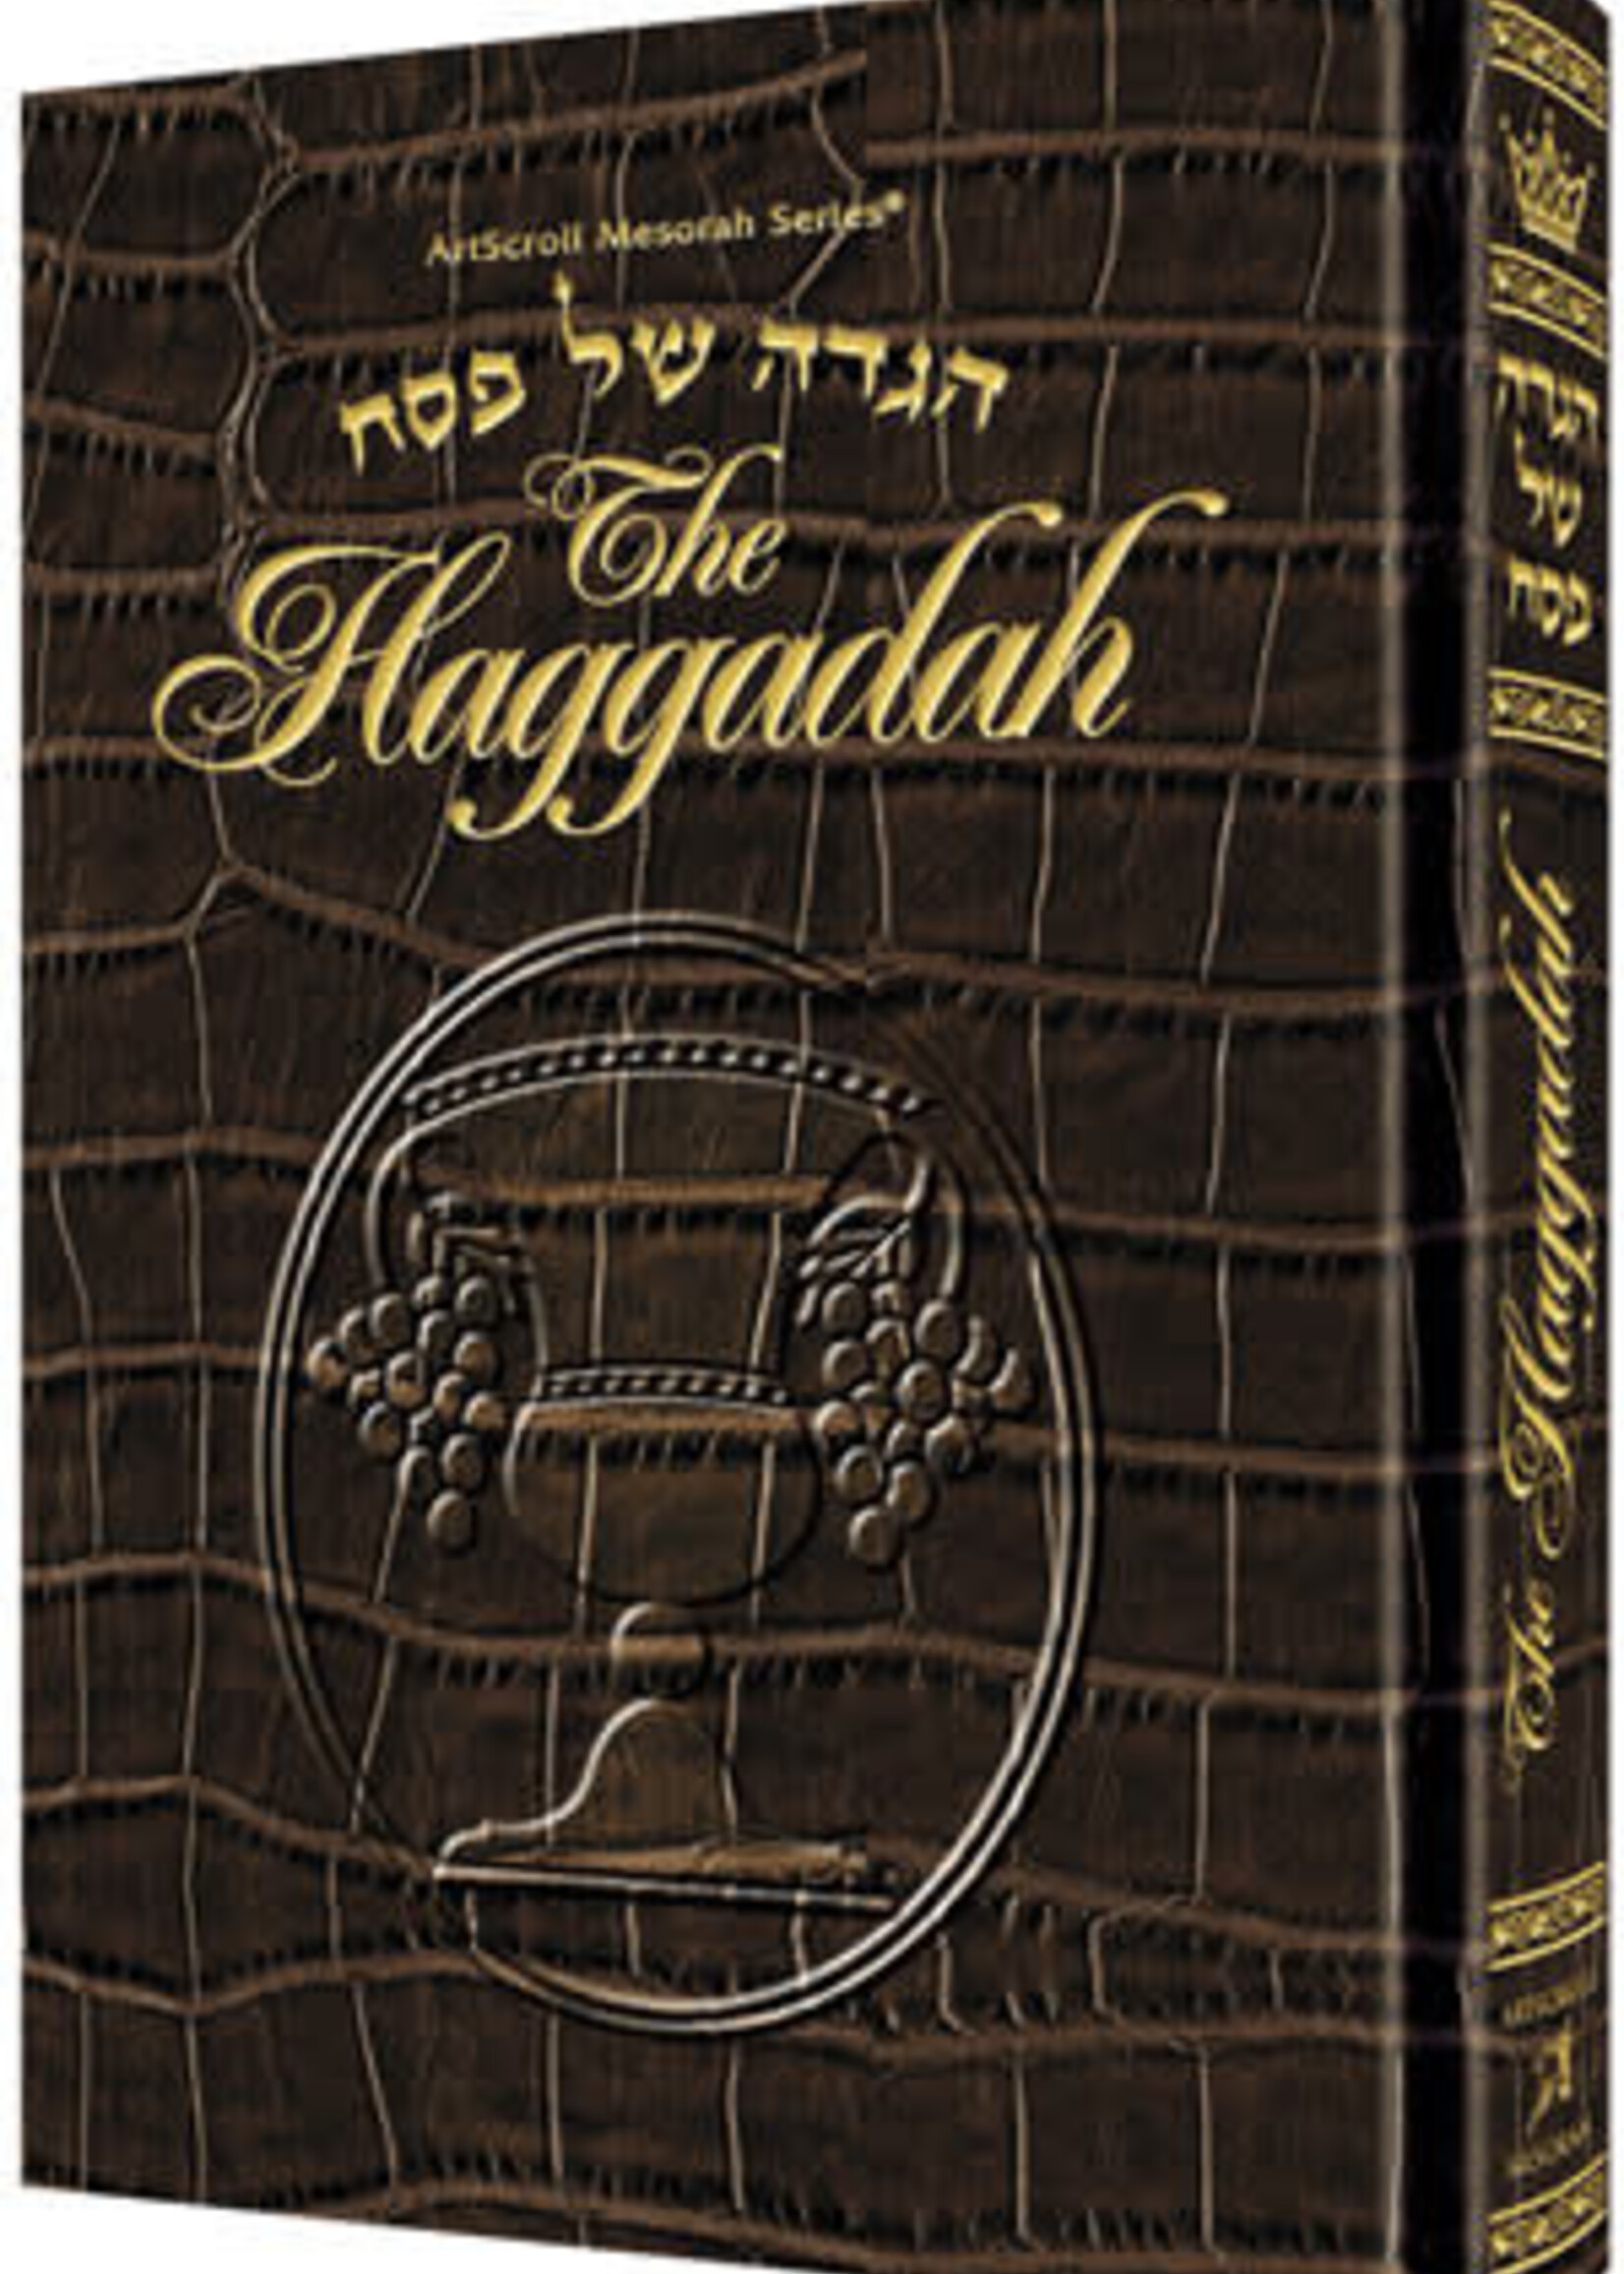 Rabbi Joseph Elias Haggadah / Alligator Leather ARTSCROLL